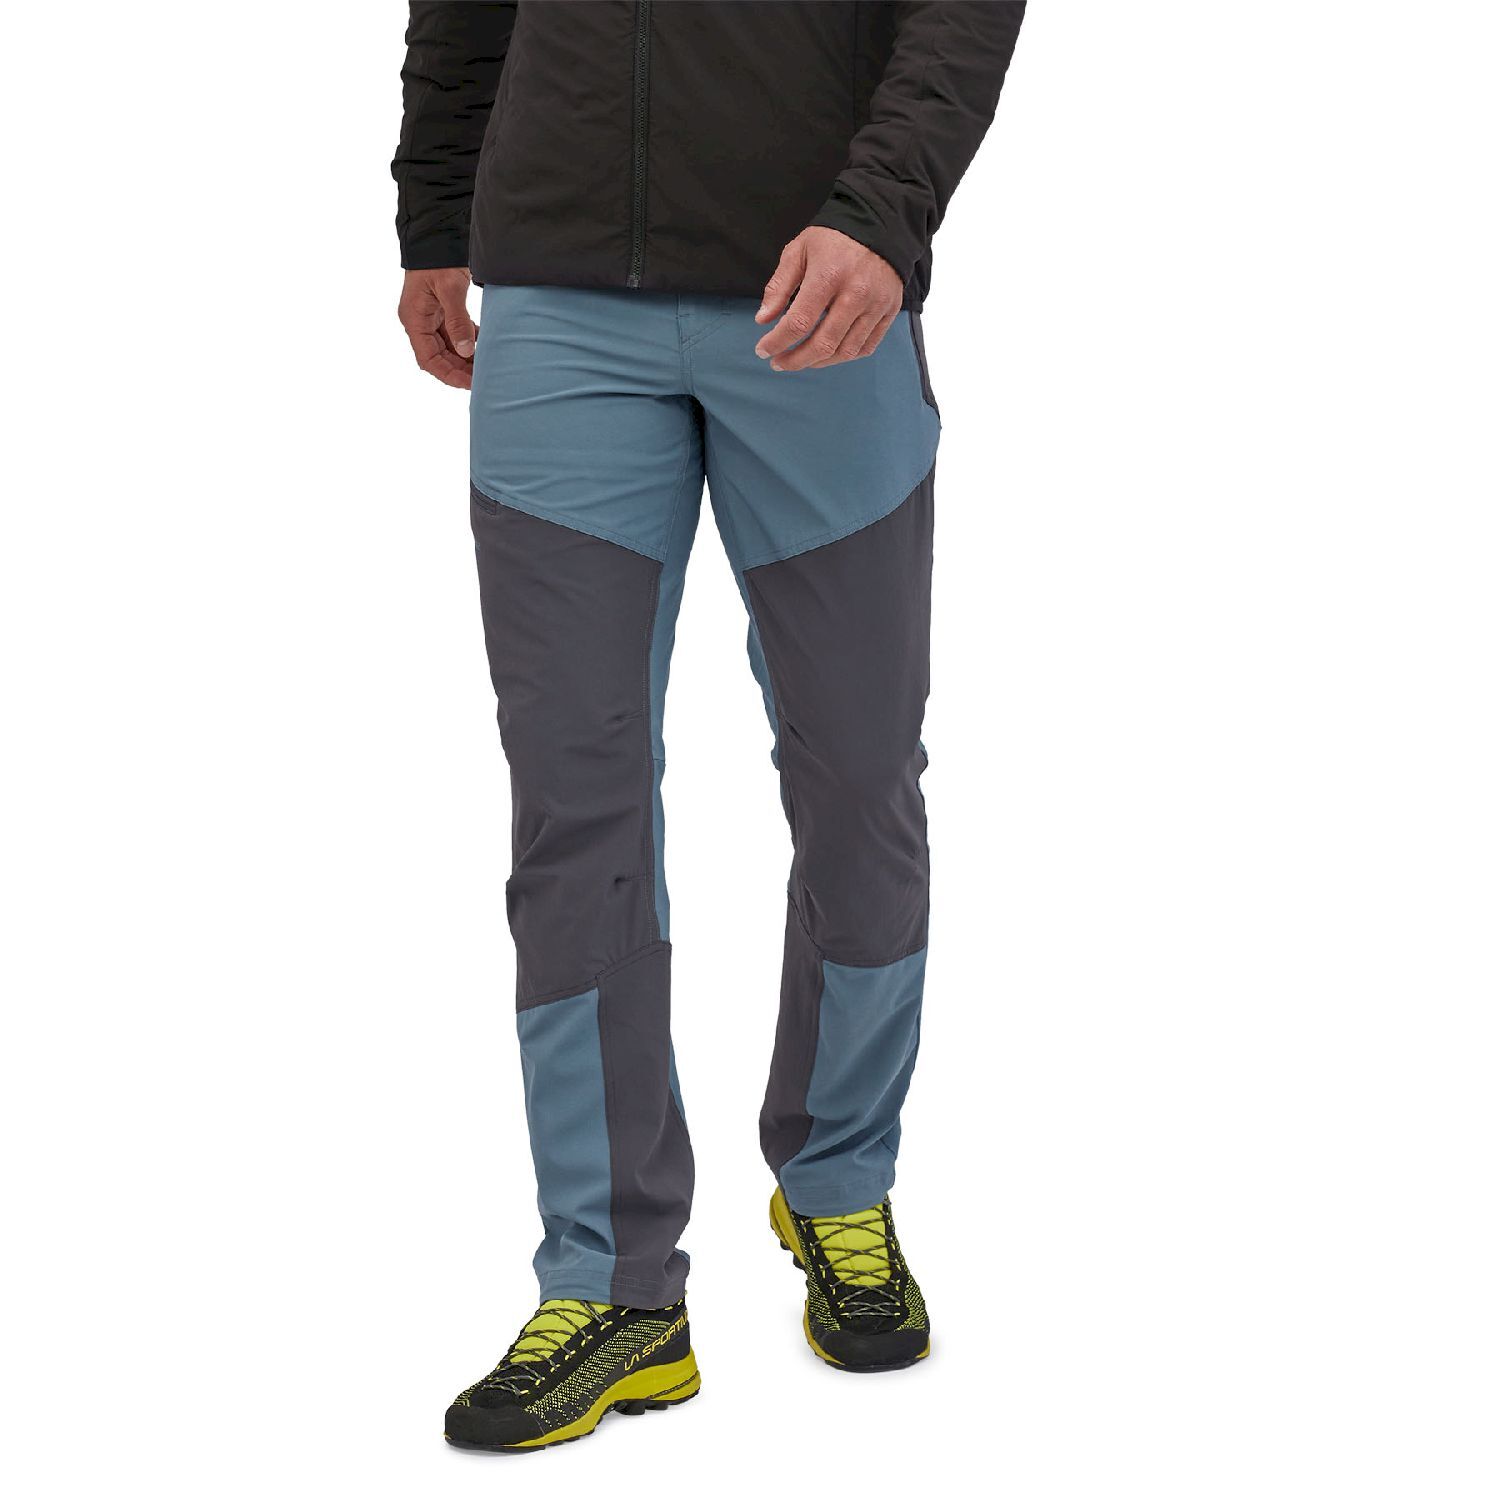 Patagonia Altvia Alpine Pants - Walking trousers - Men's